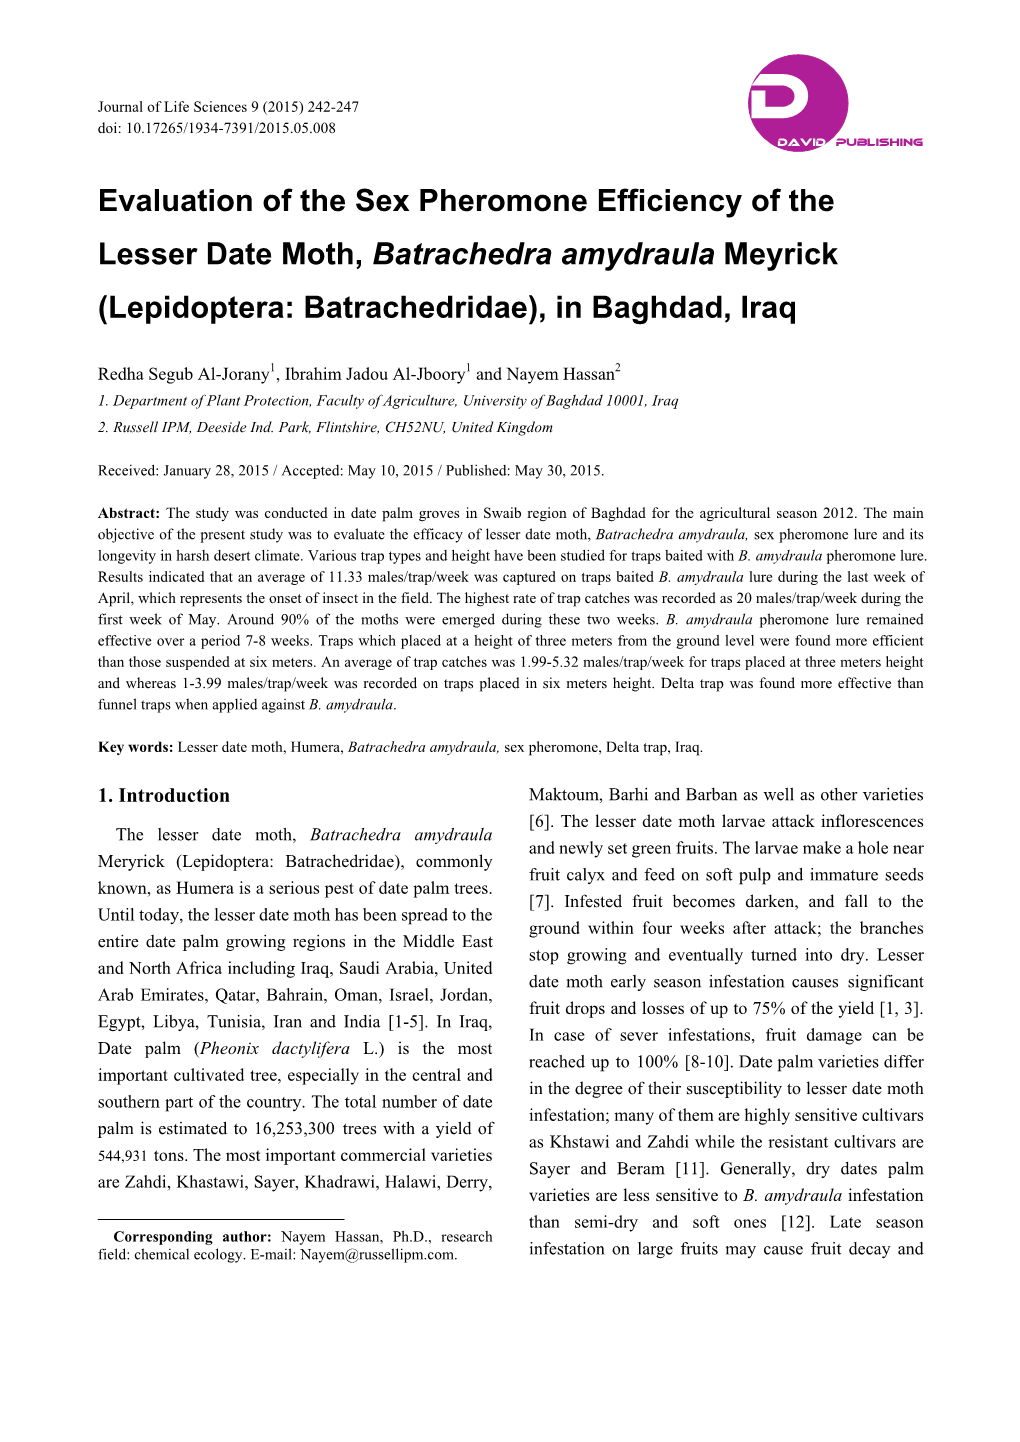 Evaluation of the Sex Pheromone Efficiency of the Lesser Date Moth, Batrachedra Amydraula Meyrick (Lepidoptera: Batrachedridae), in Baghdad, Iraq